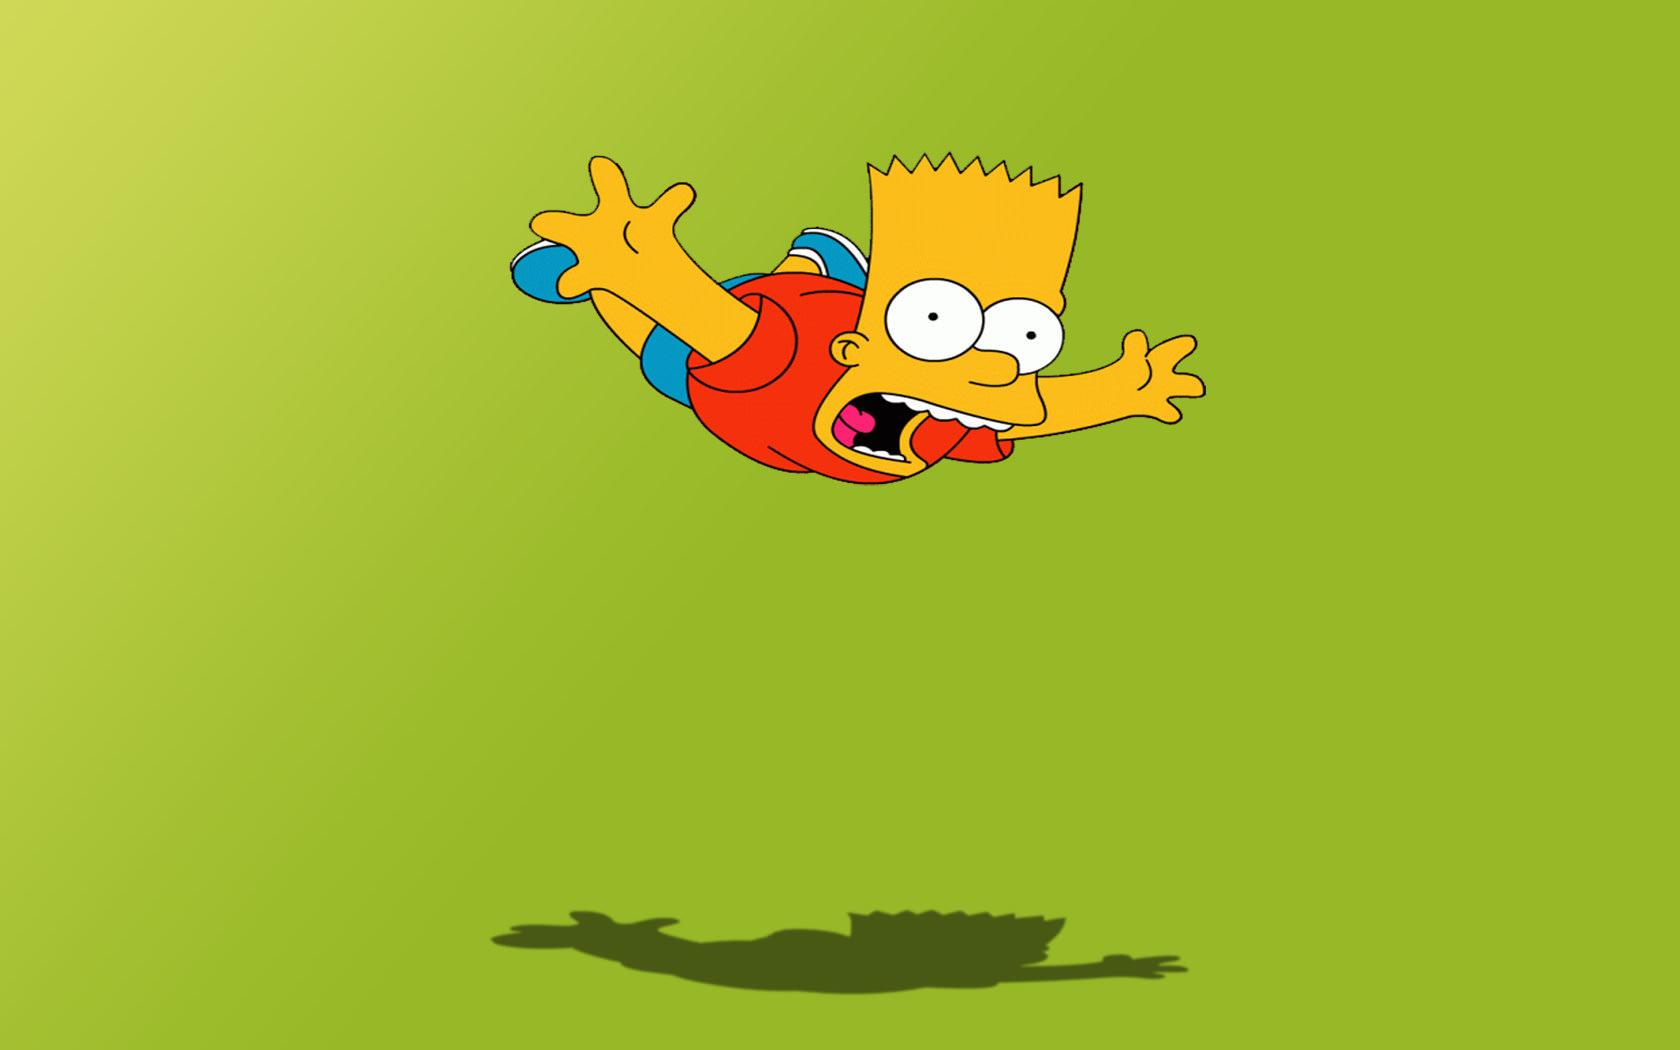 Bart Simpson wallpaper HD for desktop background